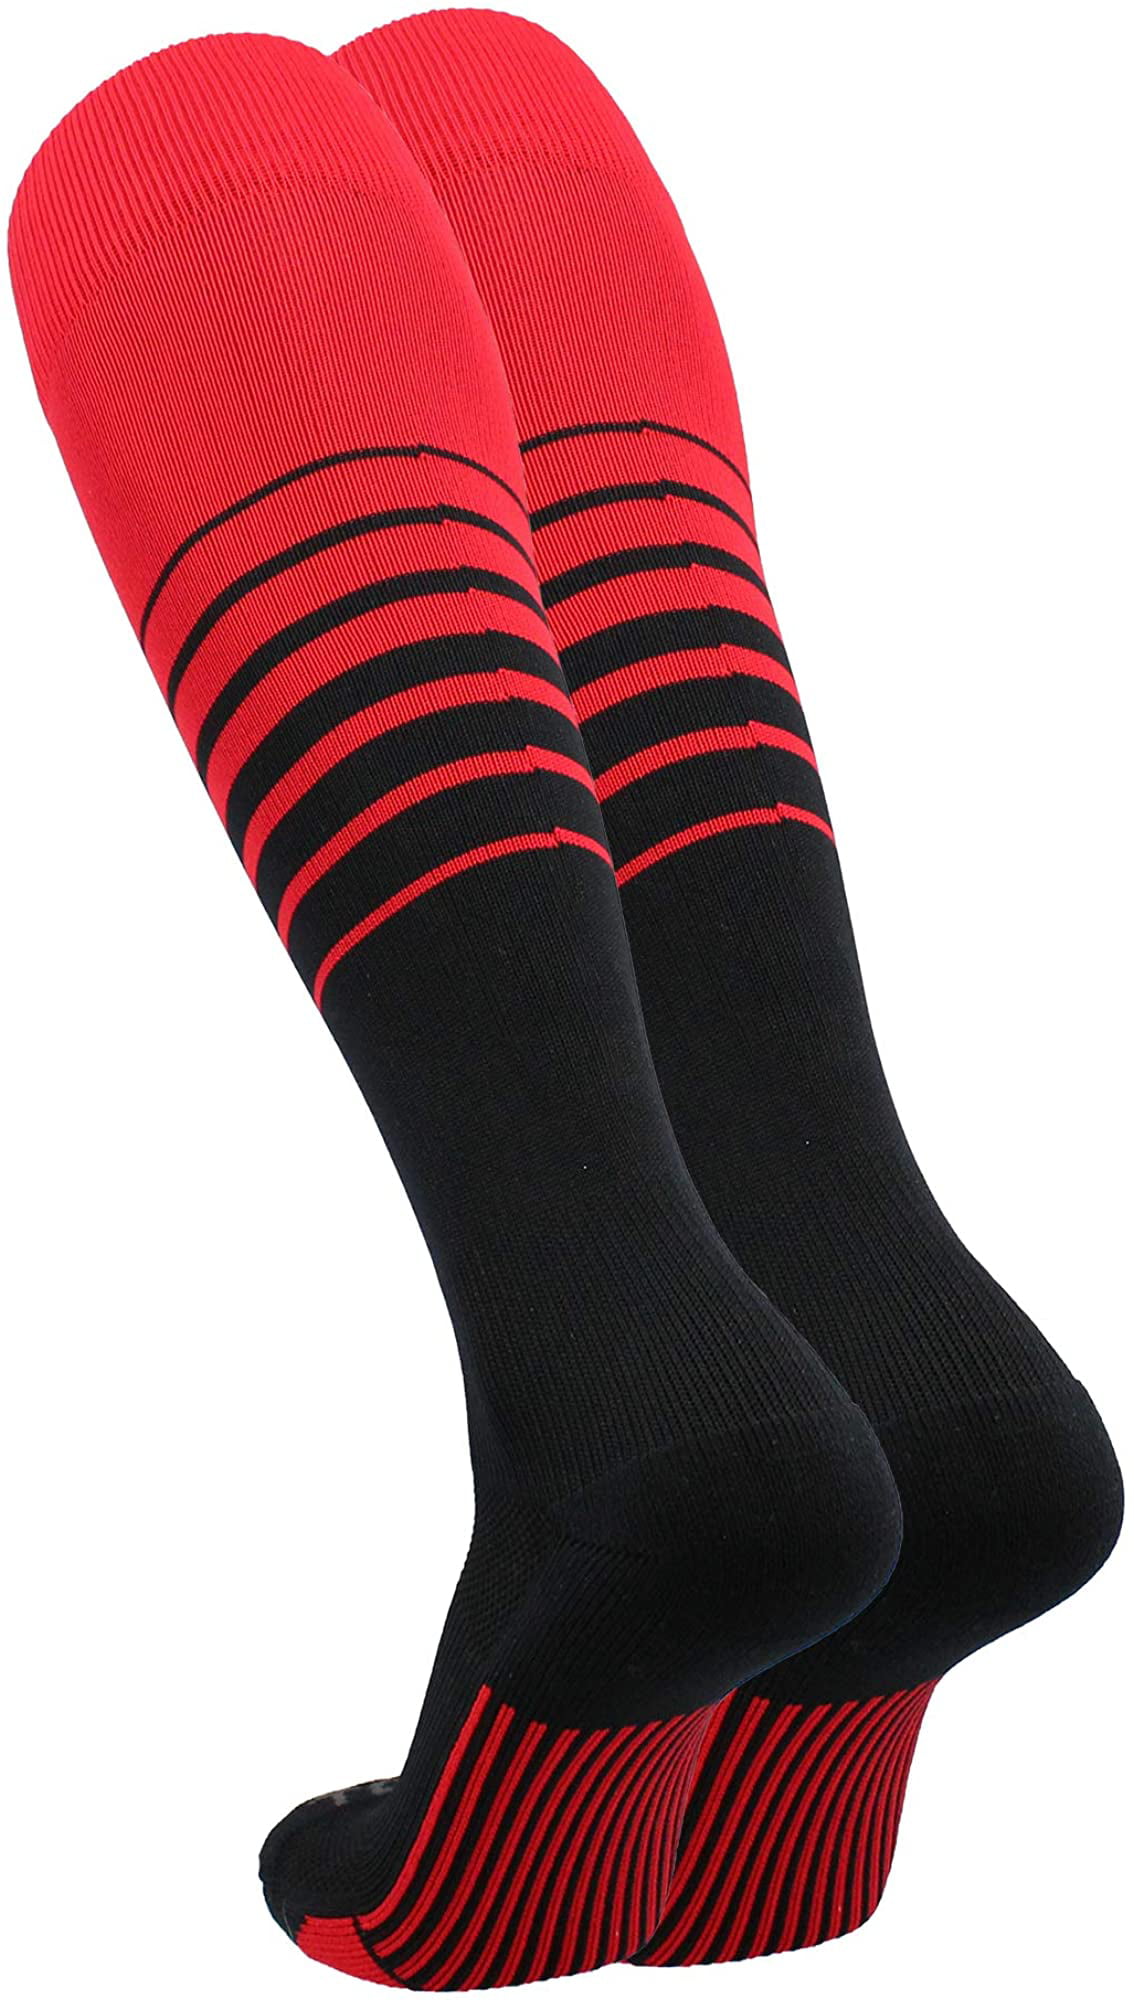 Extra Cross-Stretch for Shin Guards for Boys or Girls TCK Soccer Socks with Stripes Men or Women 